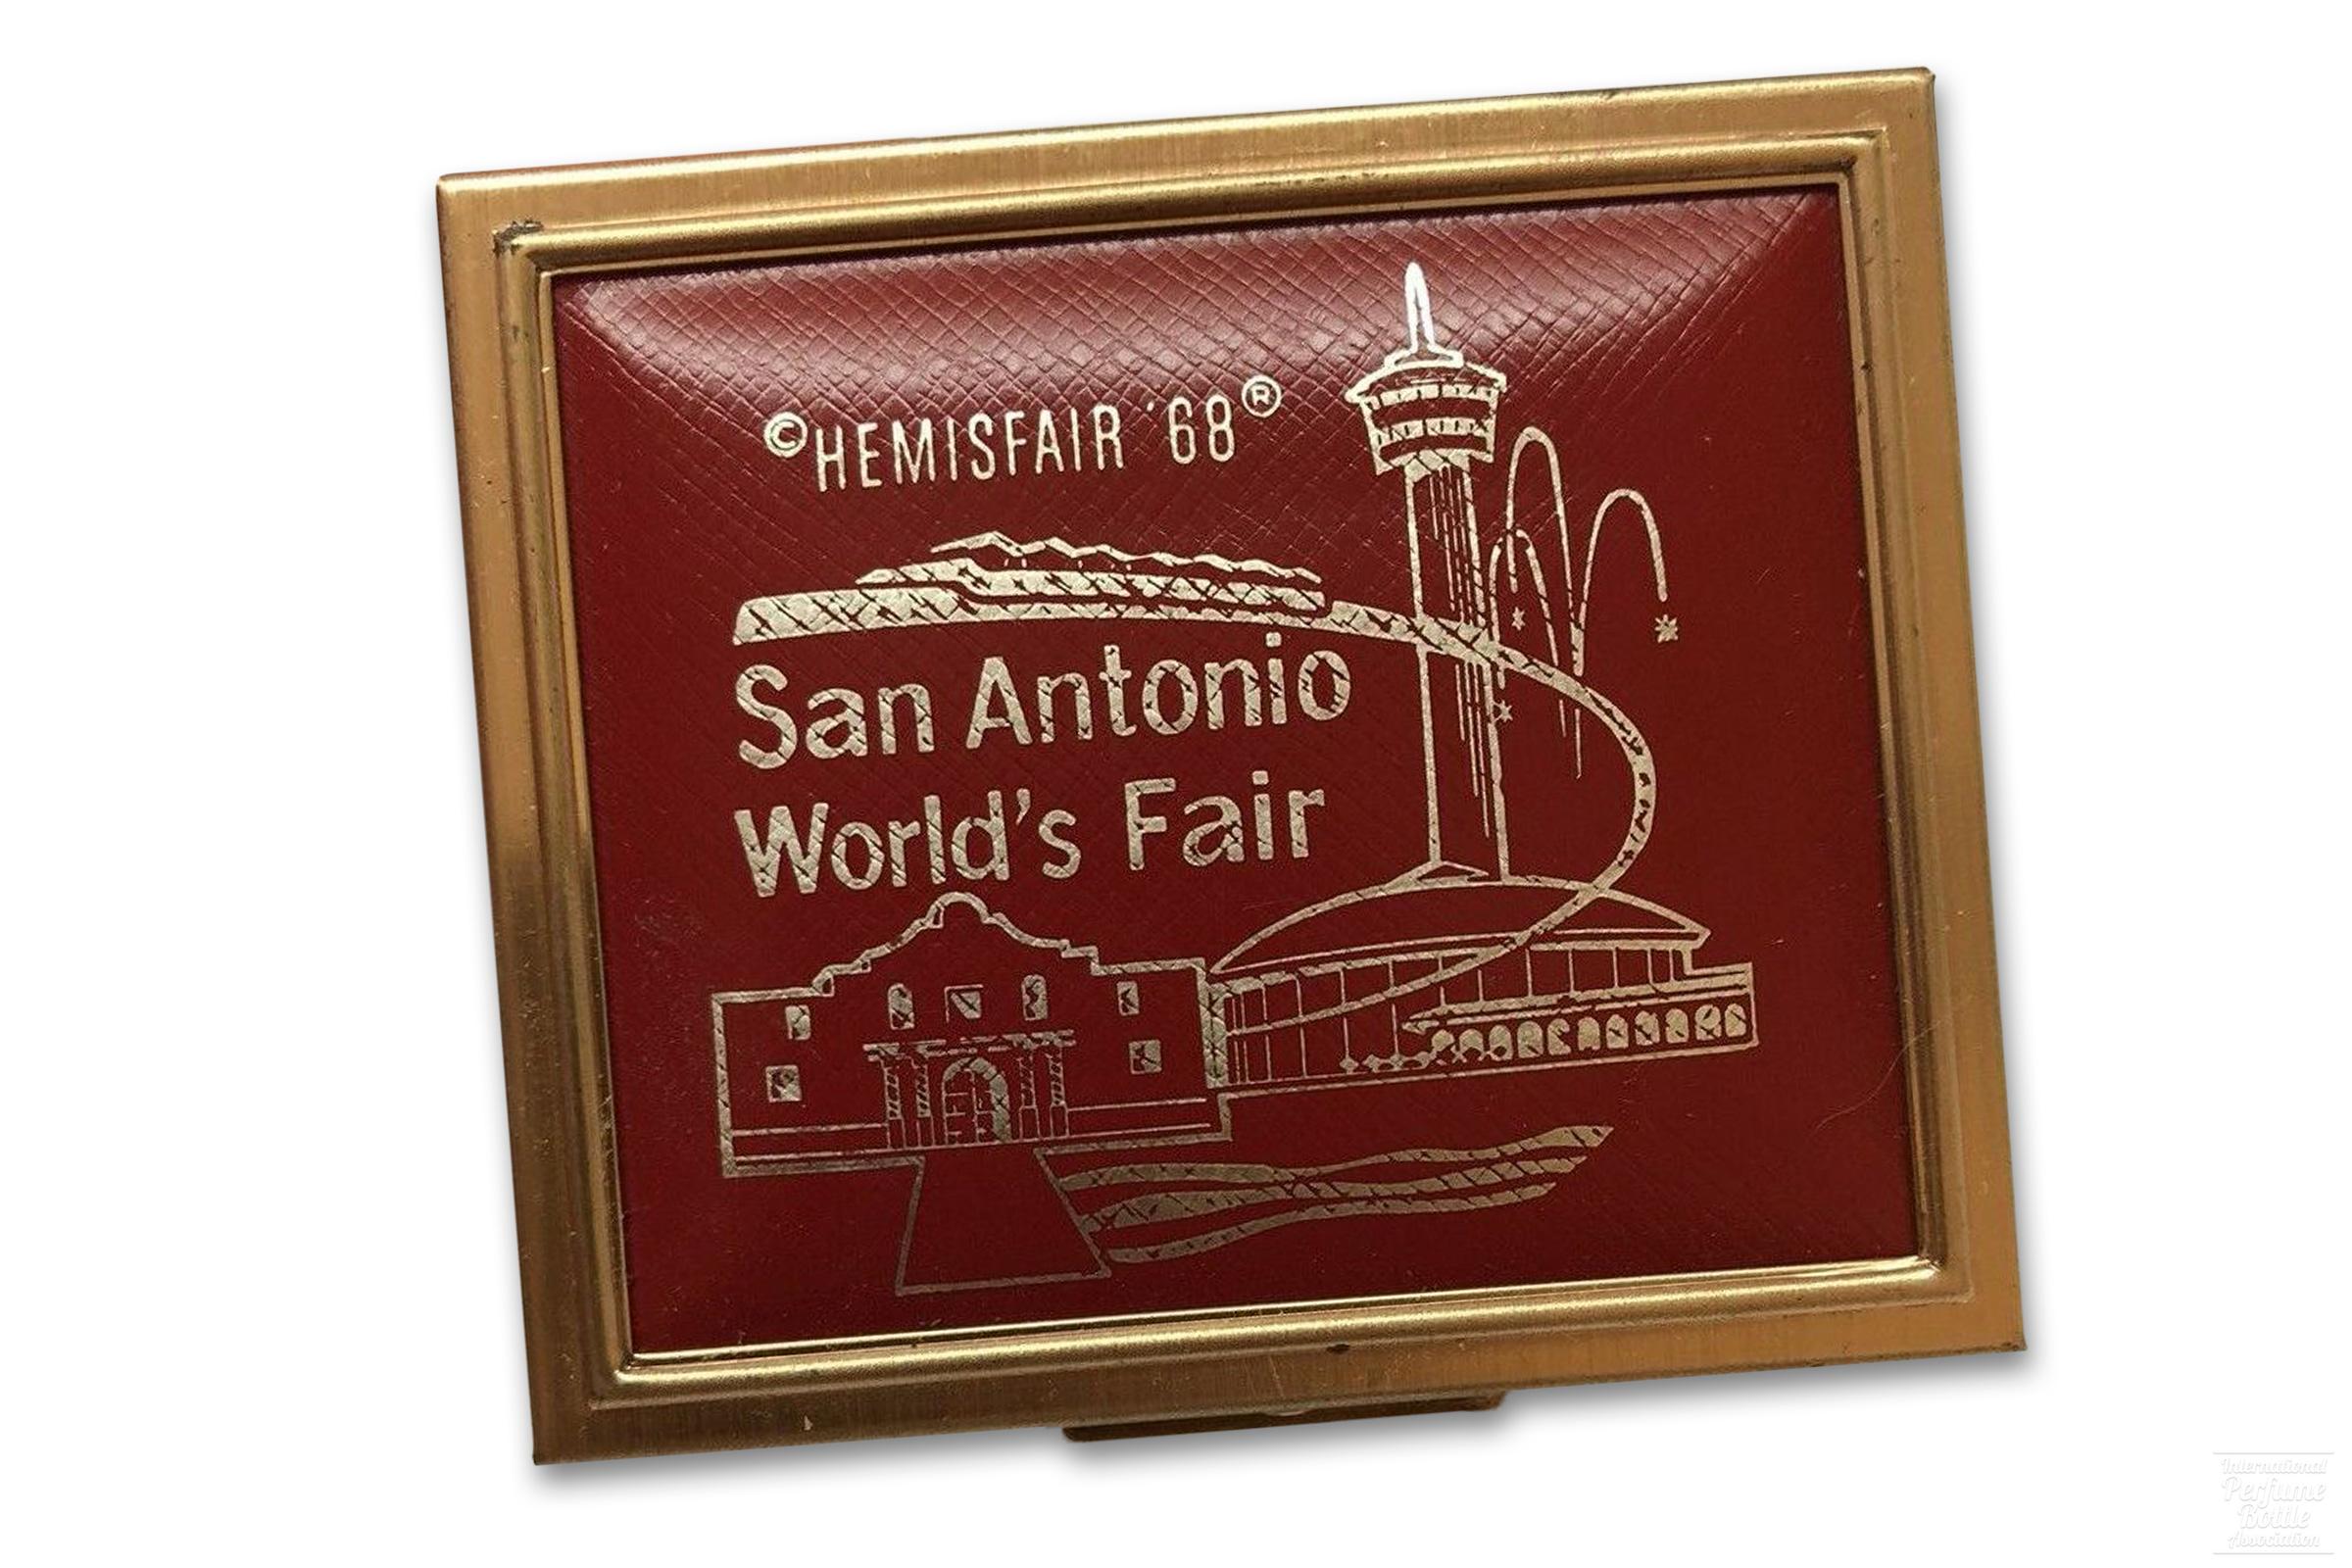 1968 San Antonio World's Fair